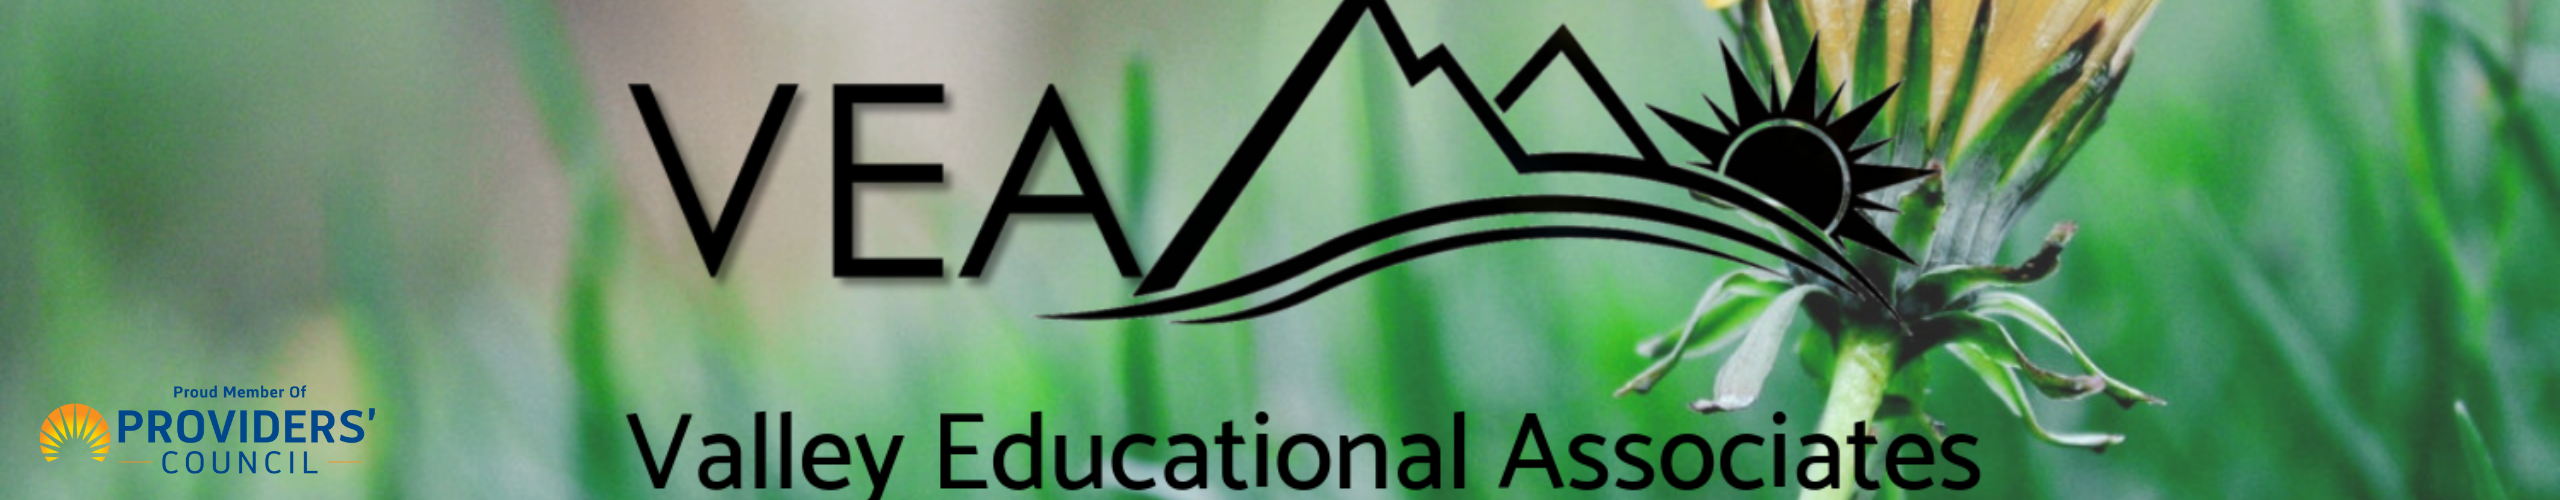 Valley Educational Associates